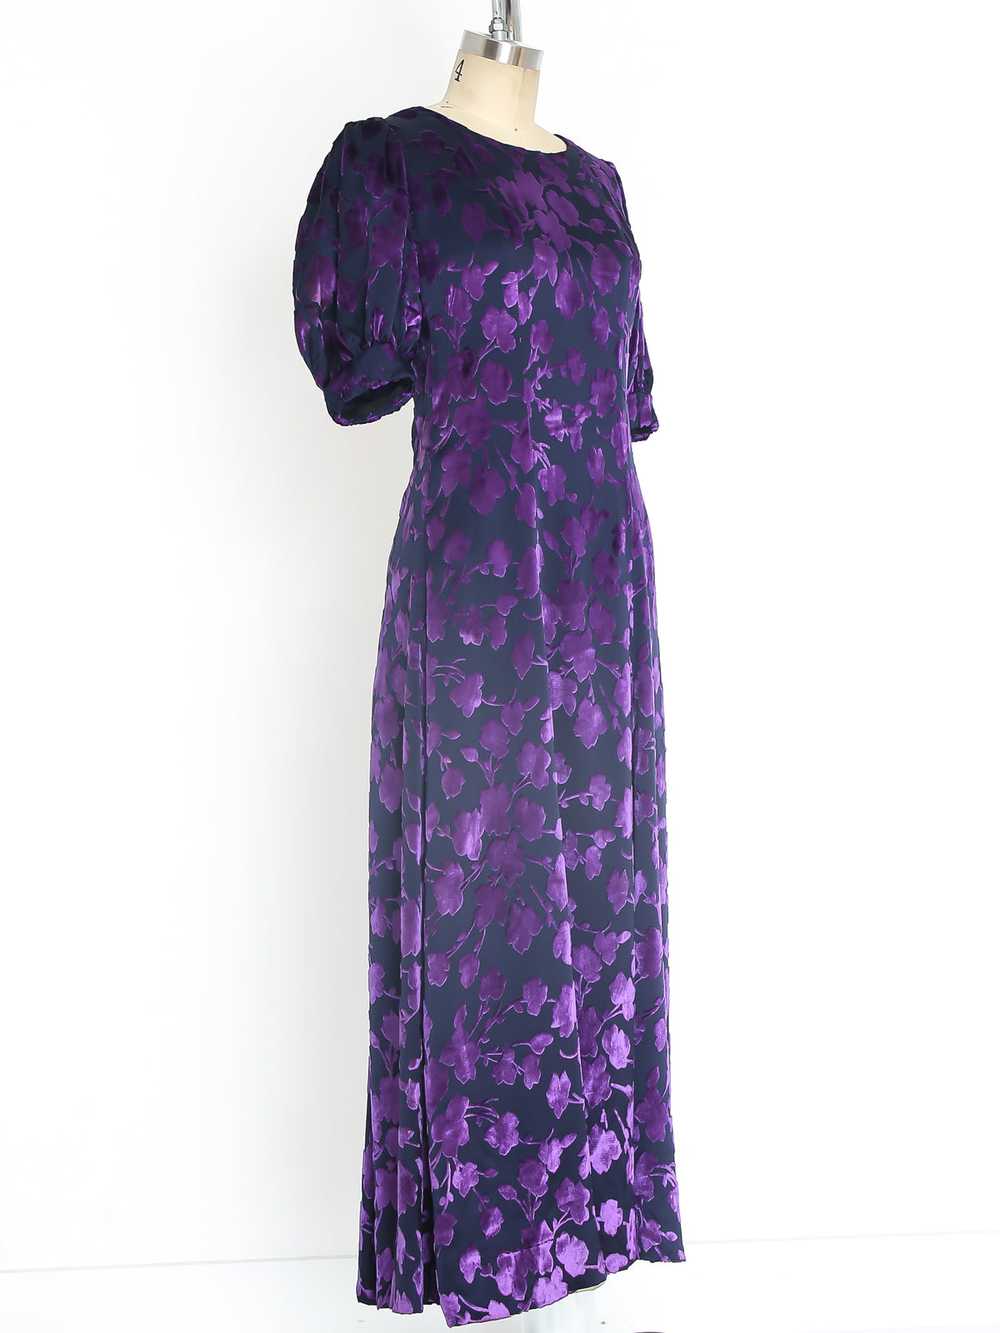 Yves Saint Laurent Amethyst Floral Dress - image 3